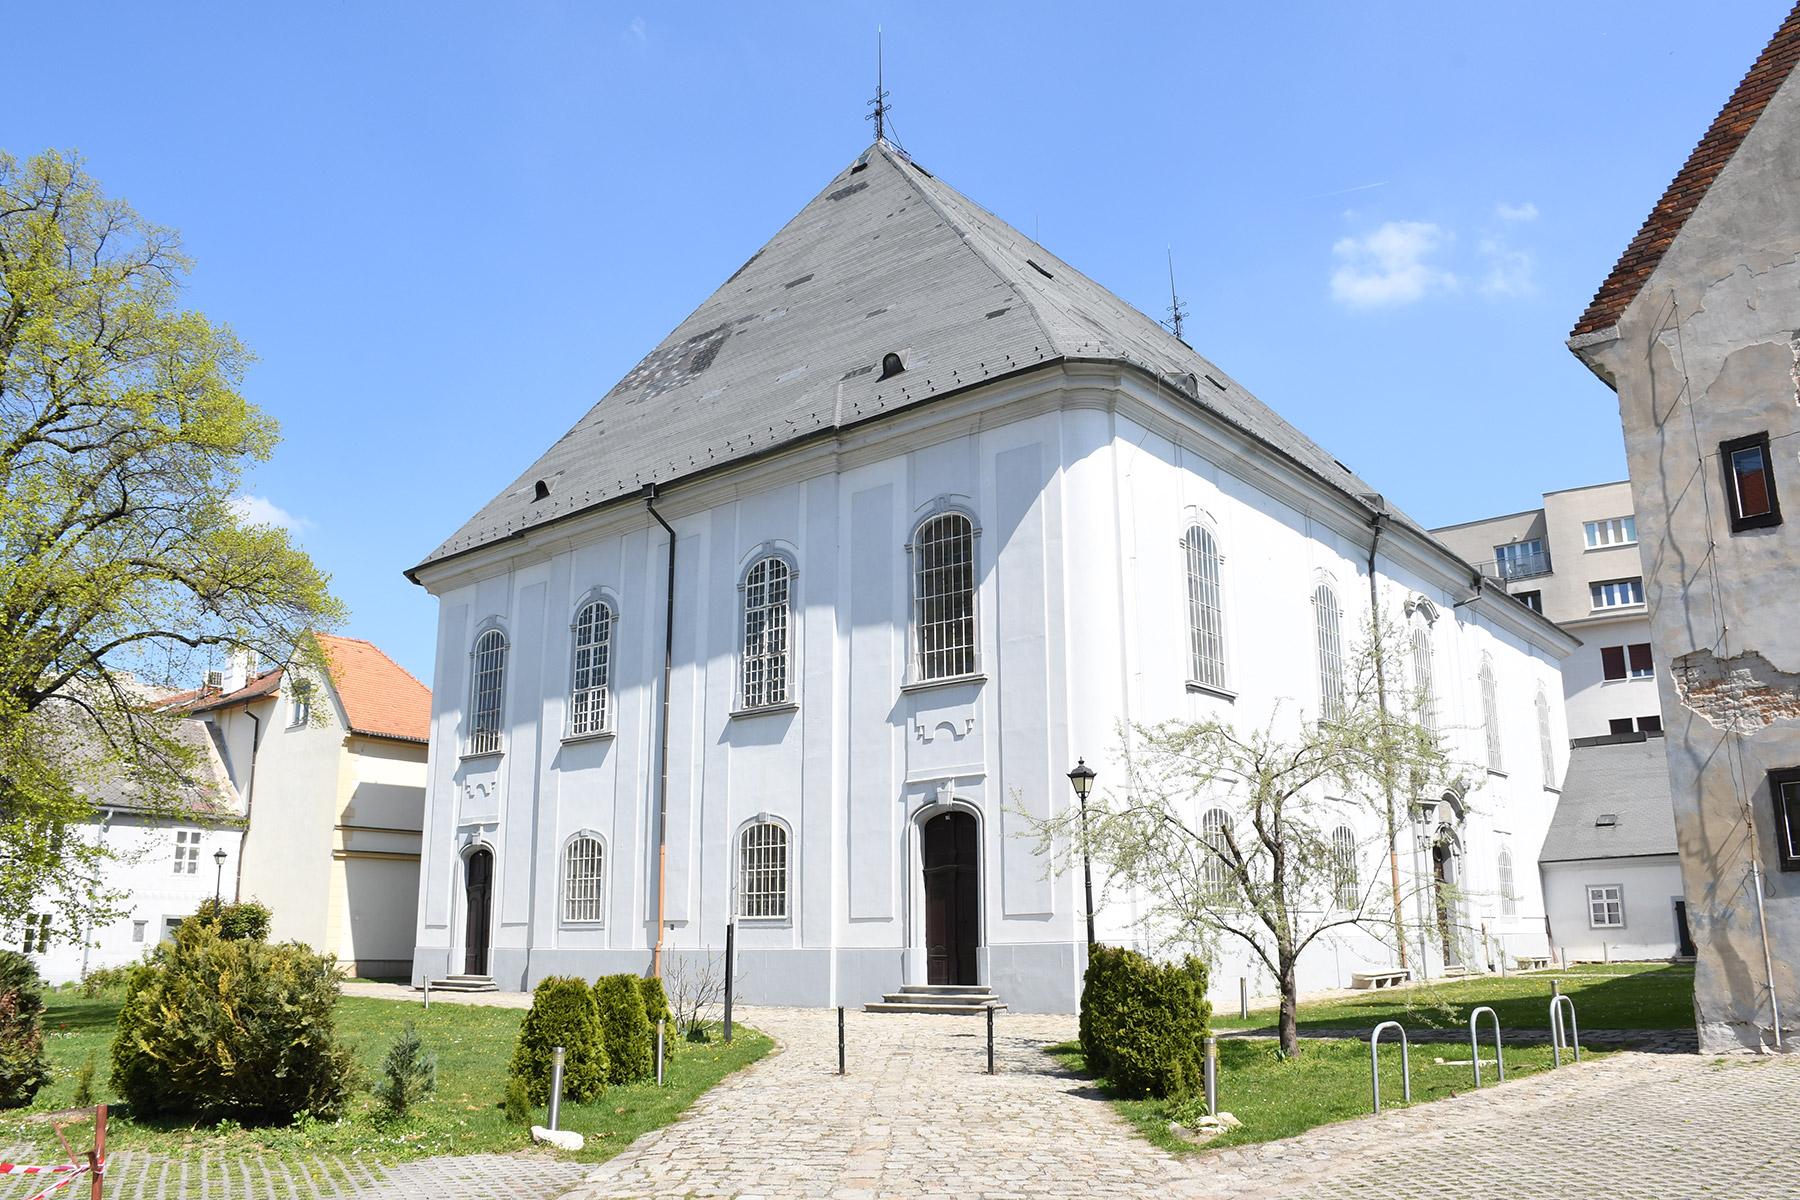  The Great Evangelical Church in Bratislava, Slovakia. Photo: Ben Skála, Benfoto